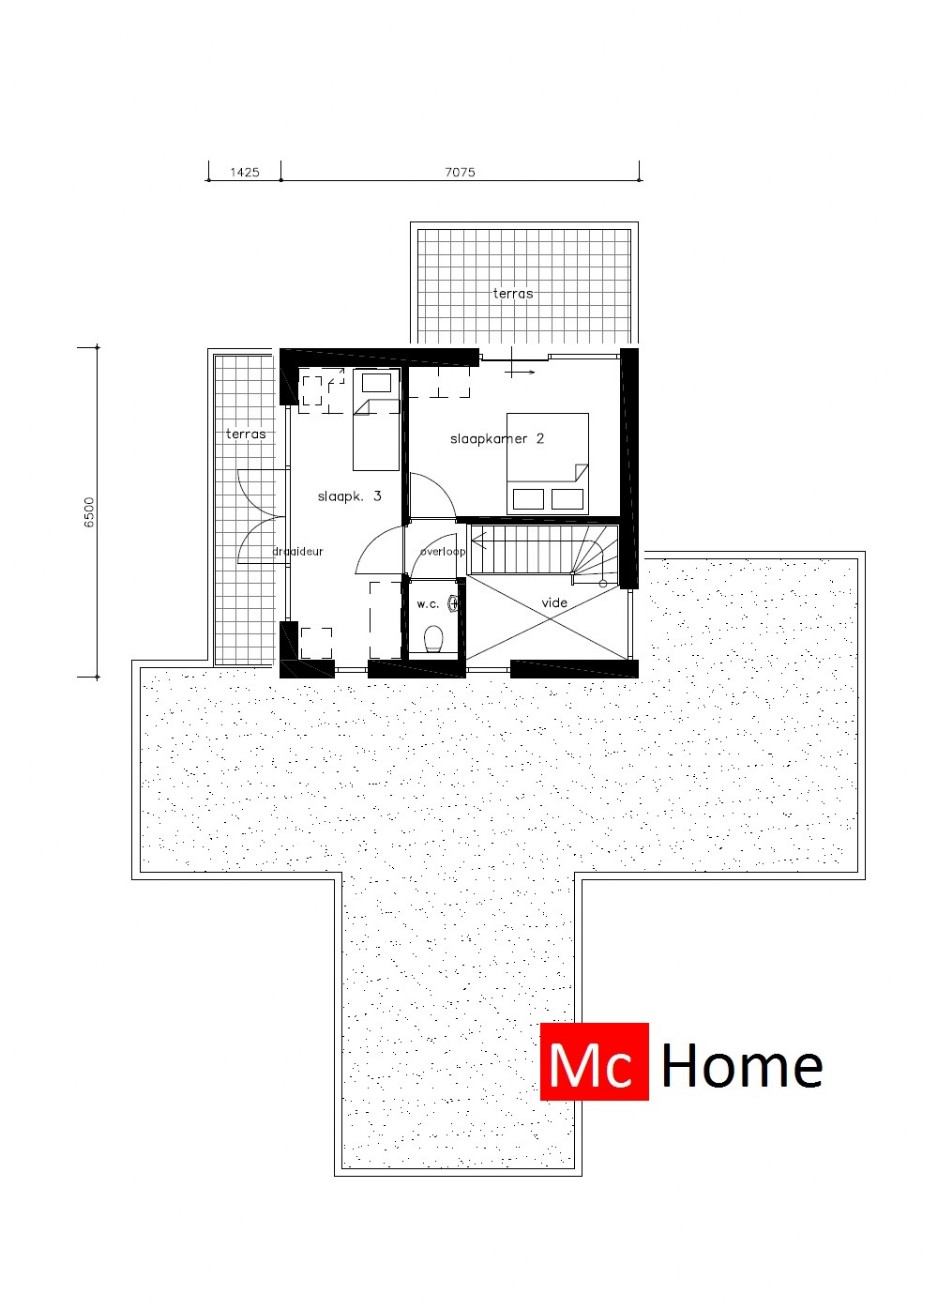 Mc-Home M370 levensloopbestendige bungelaow kleine verdieping ATLANTA MBS staalframebouw 